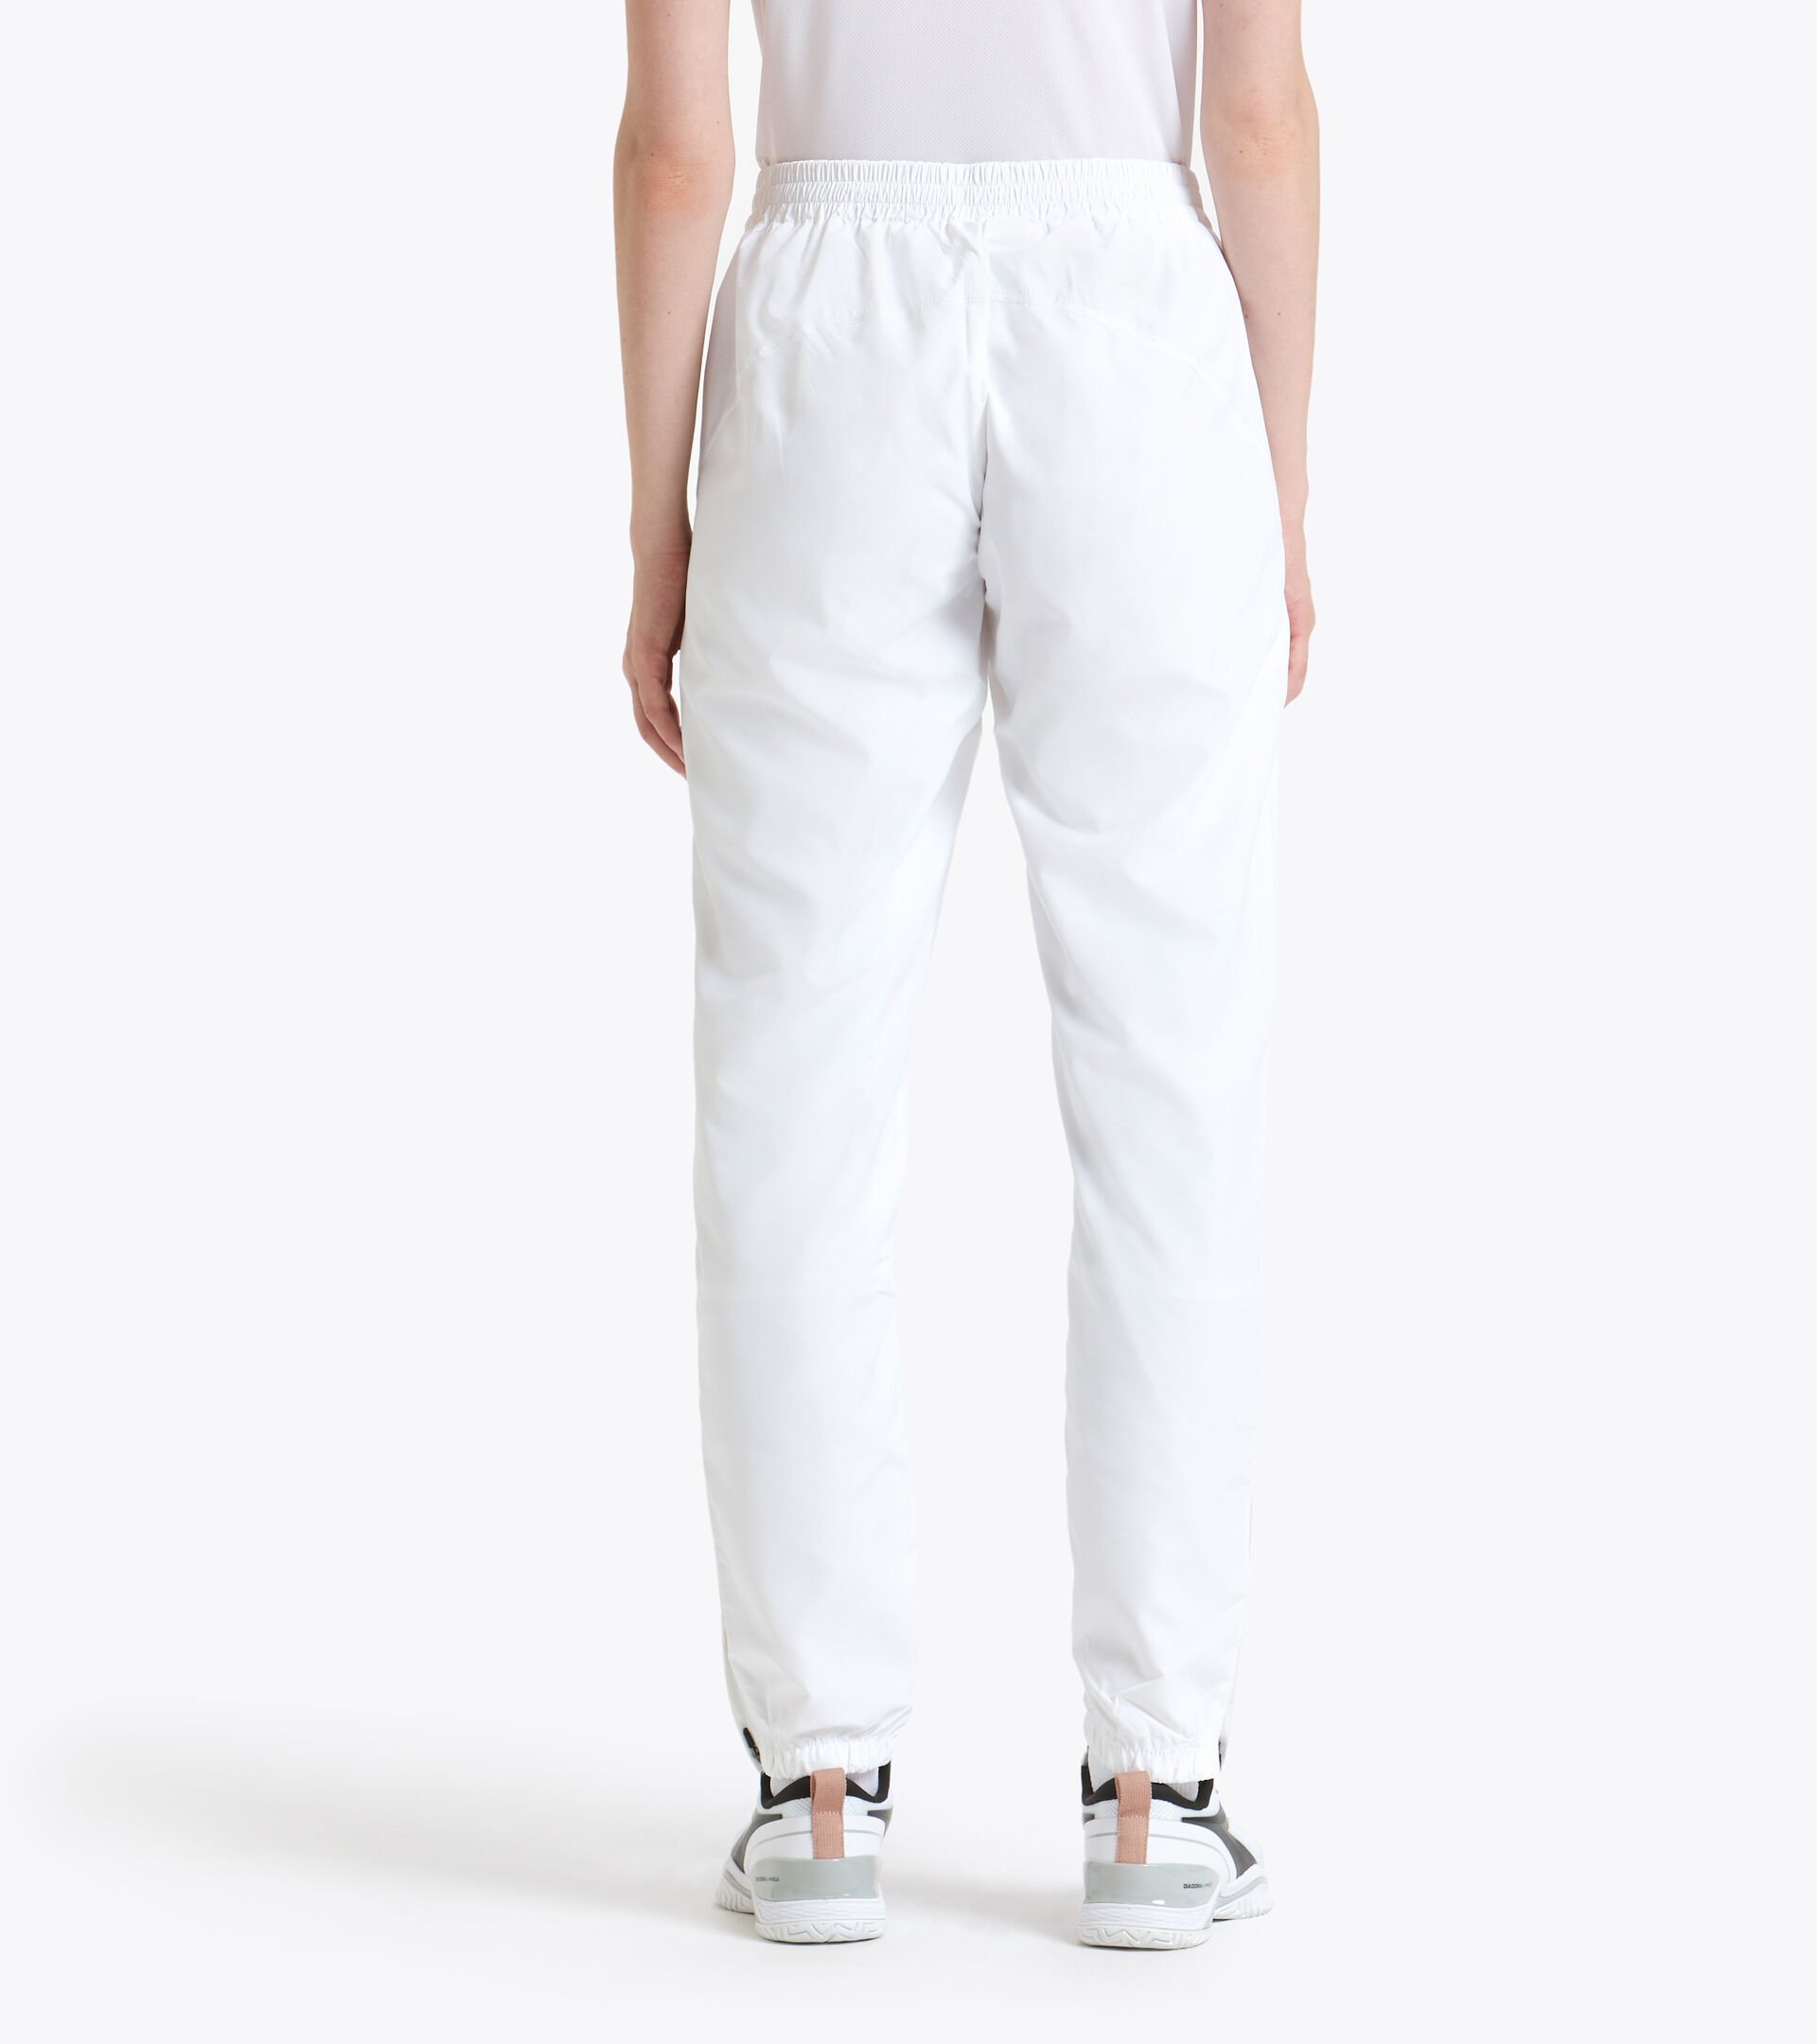 Tennis trousers - Women L. PANT COURT OPTICAL WHITE - Diadora